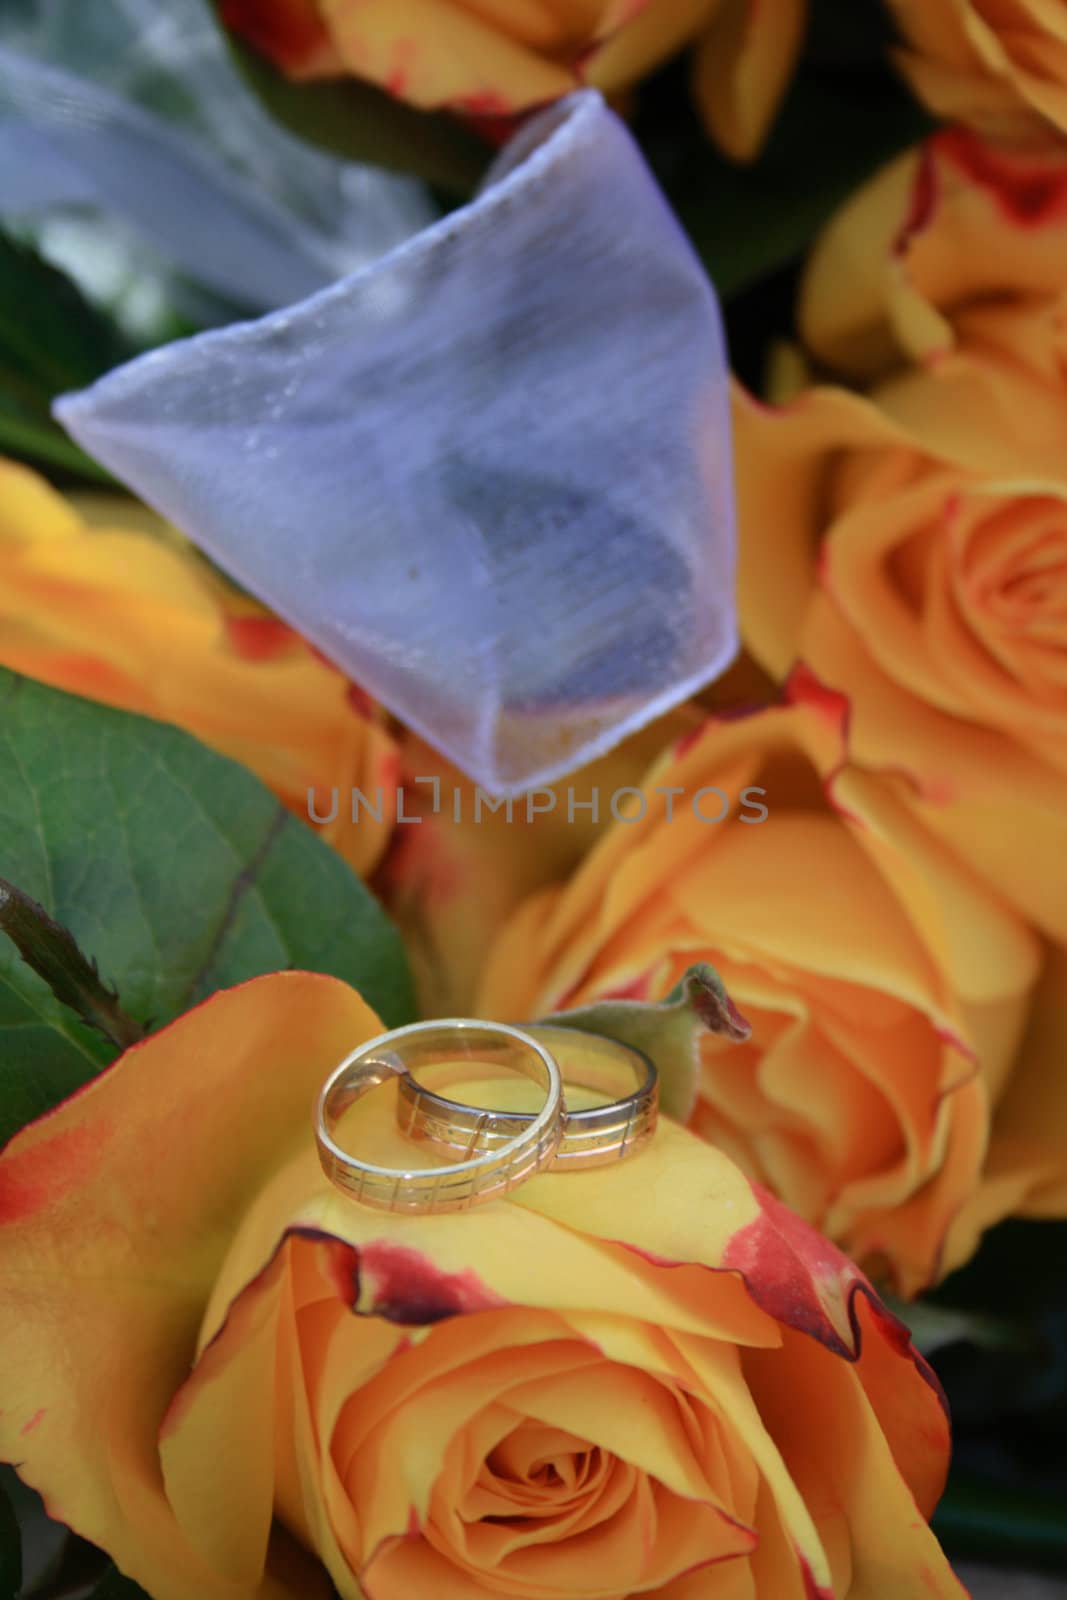 very nice rings as easy wedding background